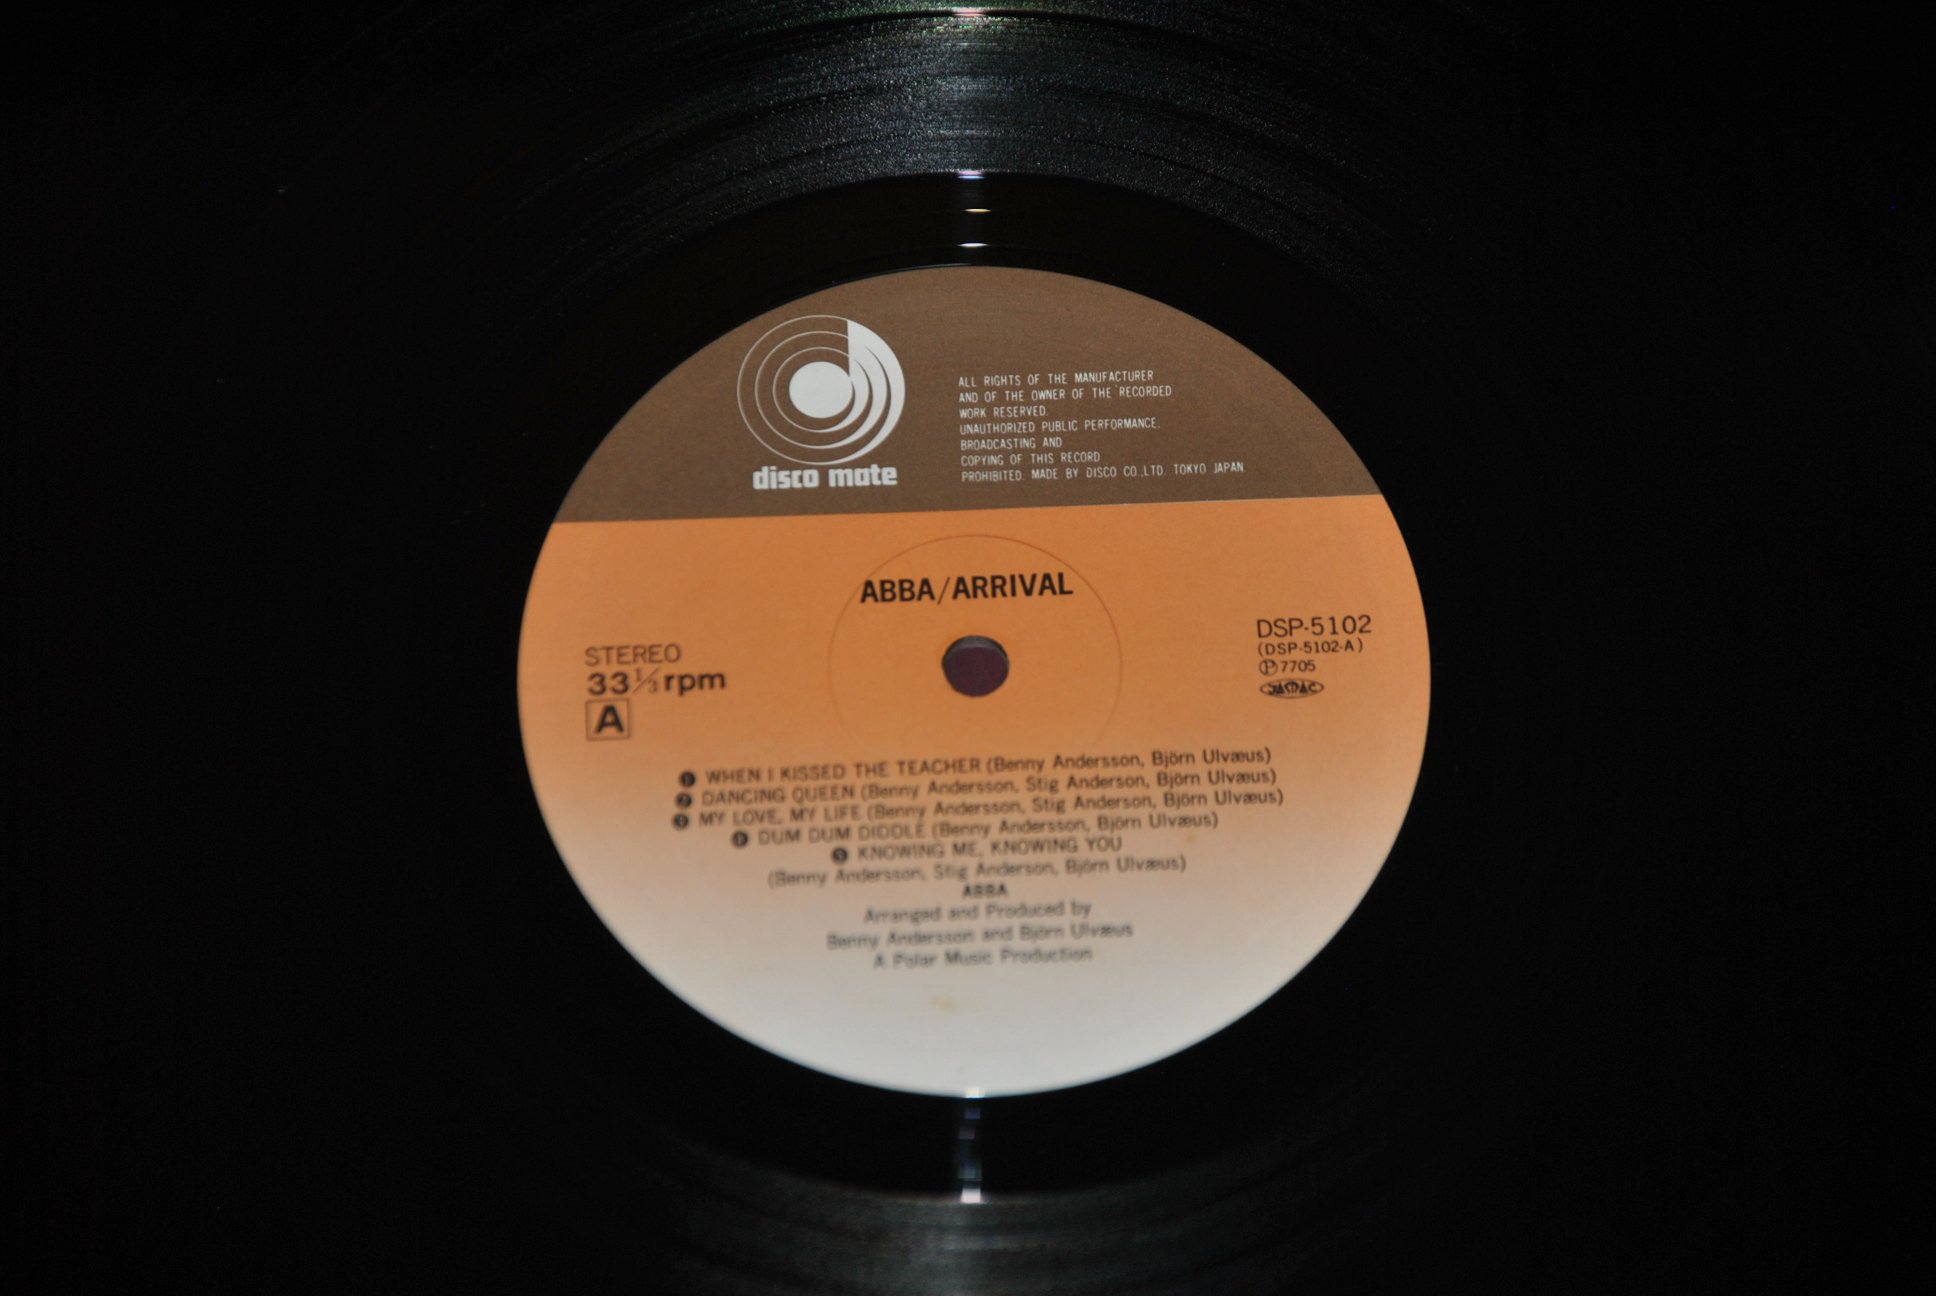 ABBA – ARRIVAL – DISCOMATE DSP-5102 1977 – LP JAPAN OBI NM

LP EDIZIONE GIAPPONE…